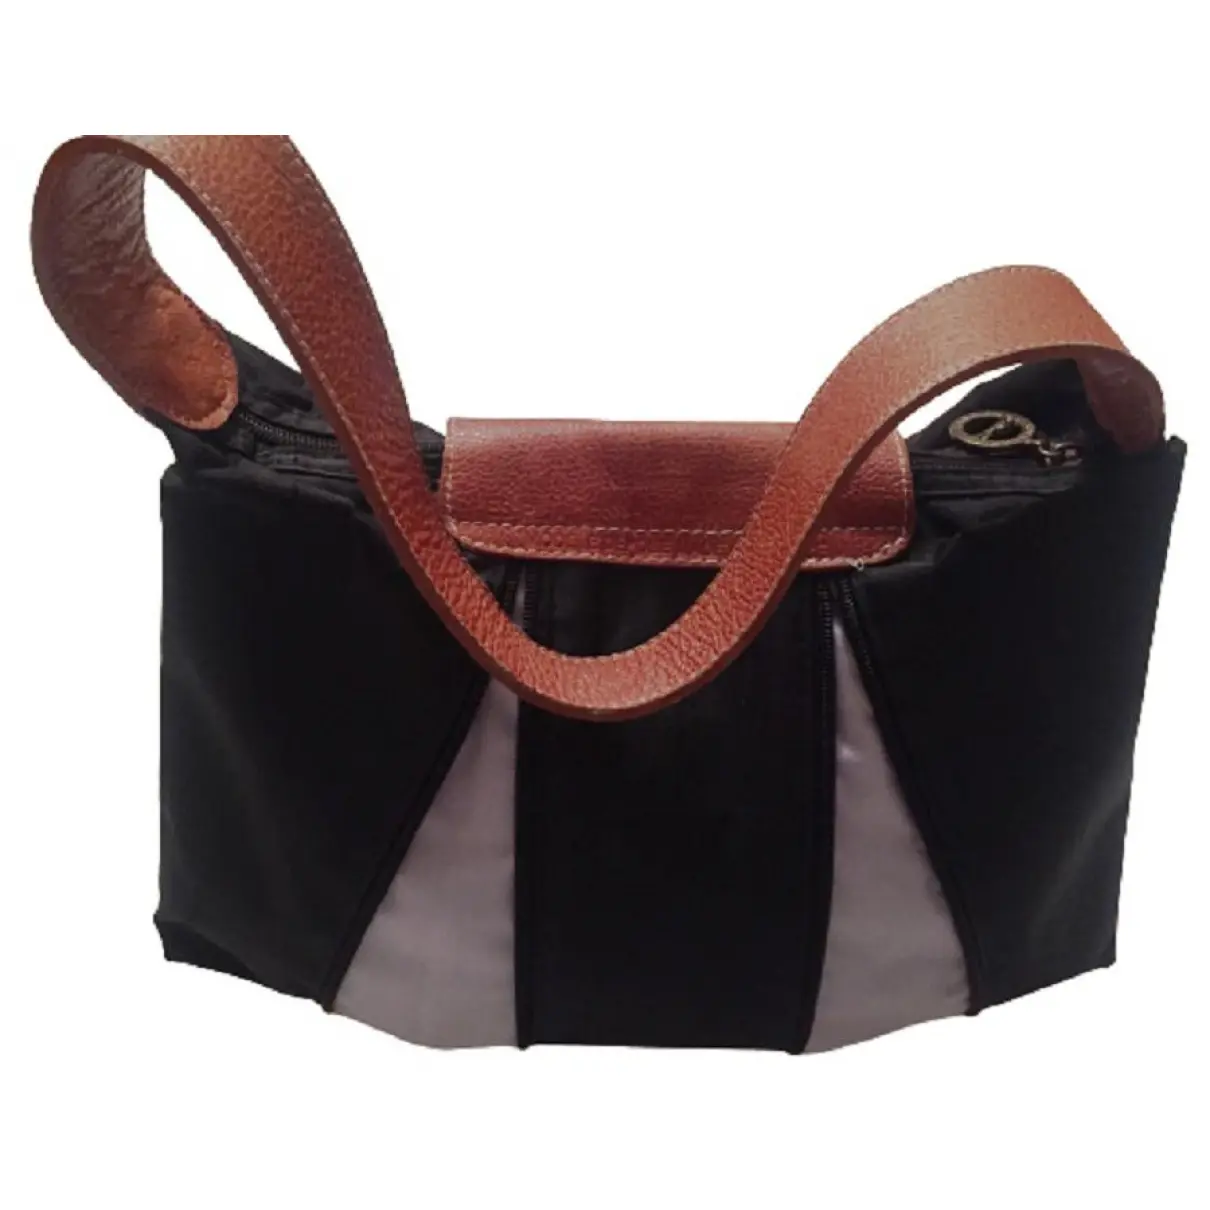 Buy Longchamp Pliage cloth handbag online